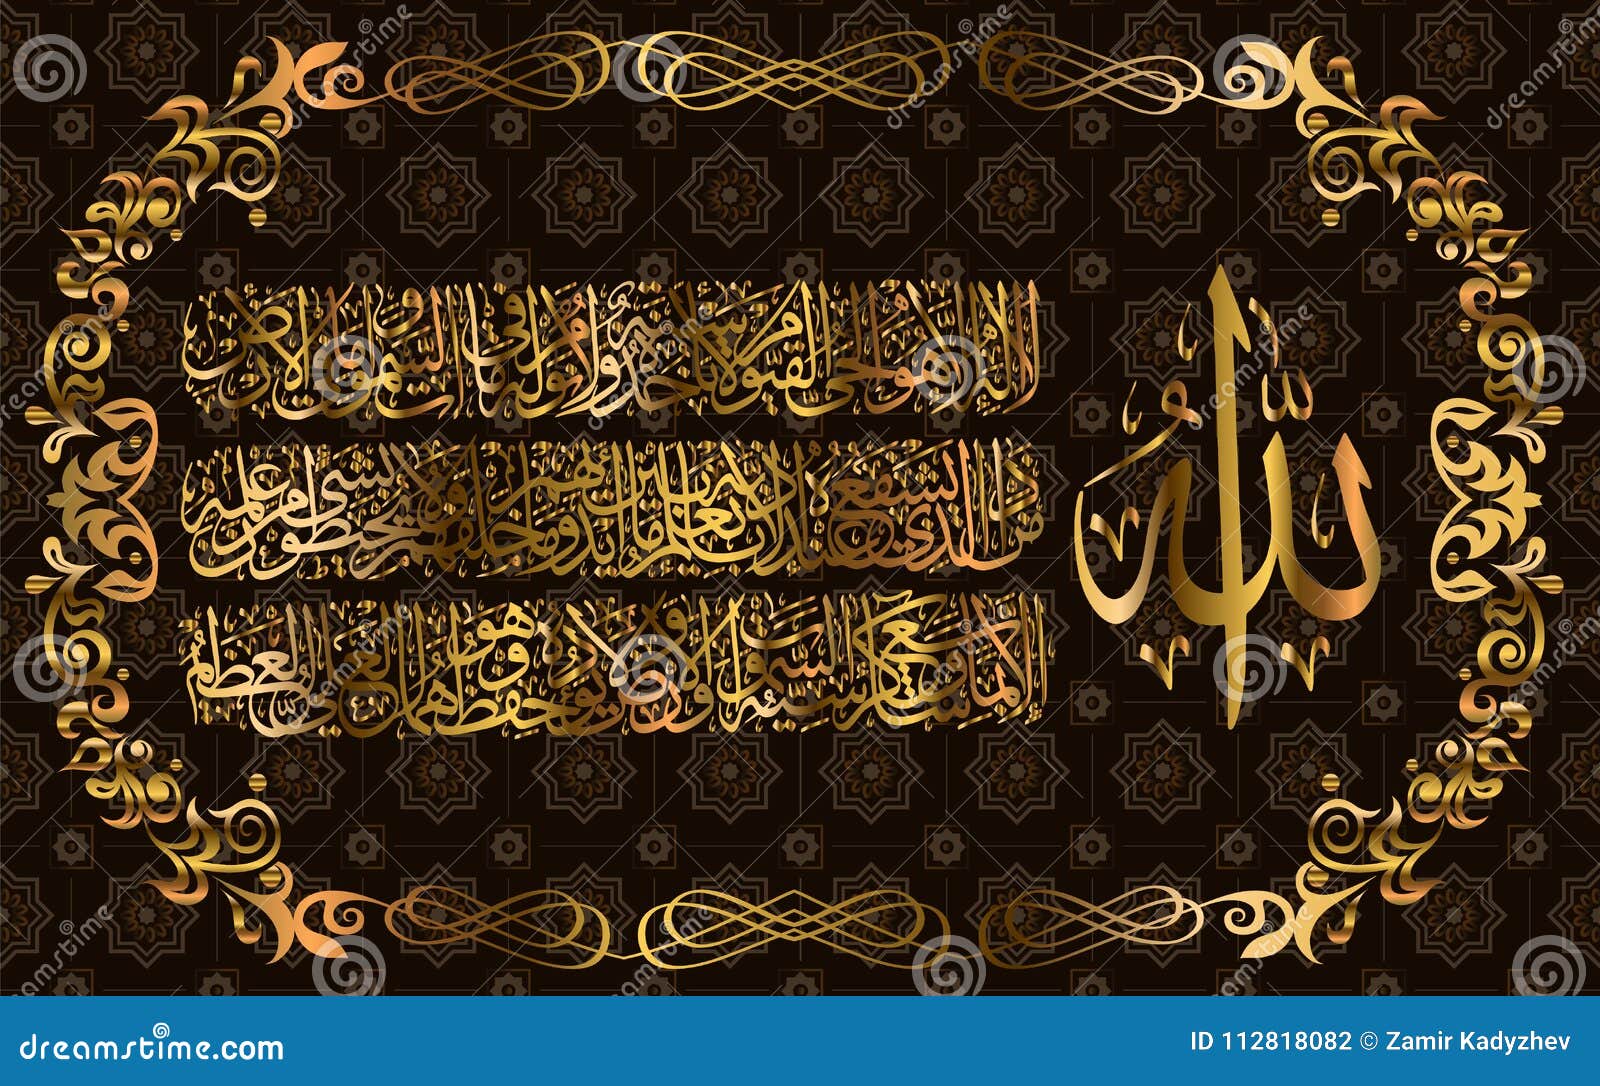 arabic calligraphy 255 ayah, sura al bakara al-kursi means